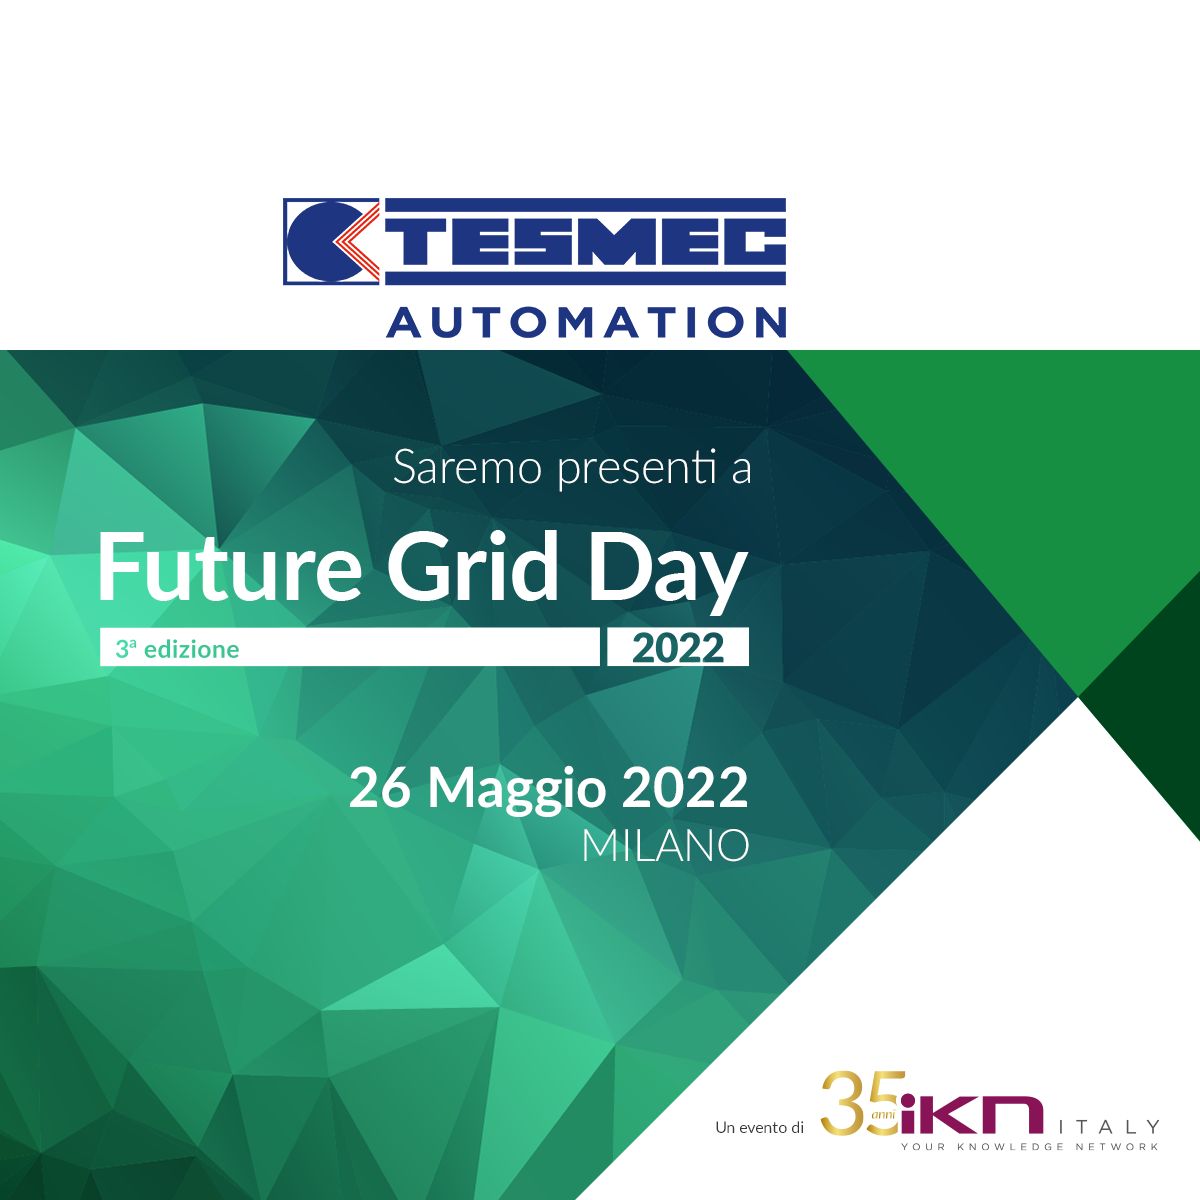 Tesmec Automation sponsor di Future Grid Day 2022